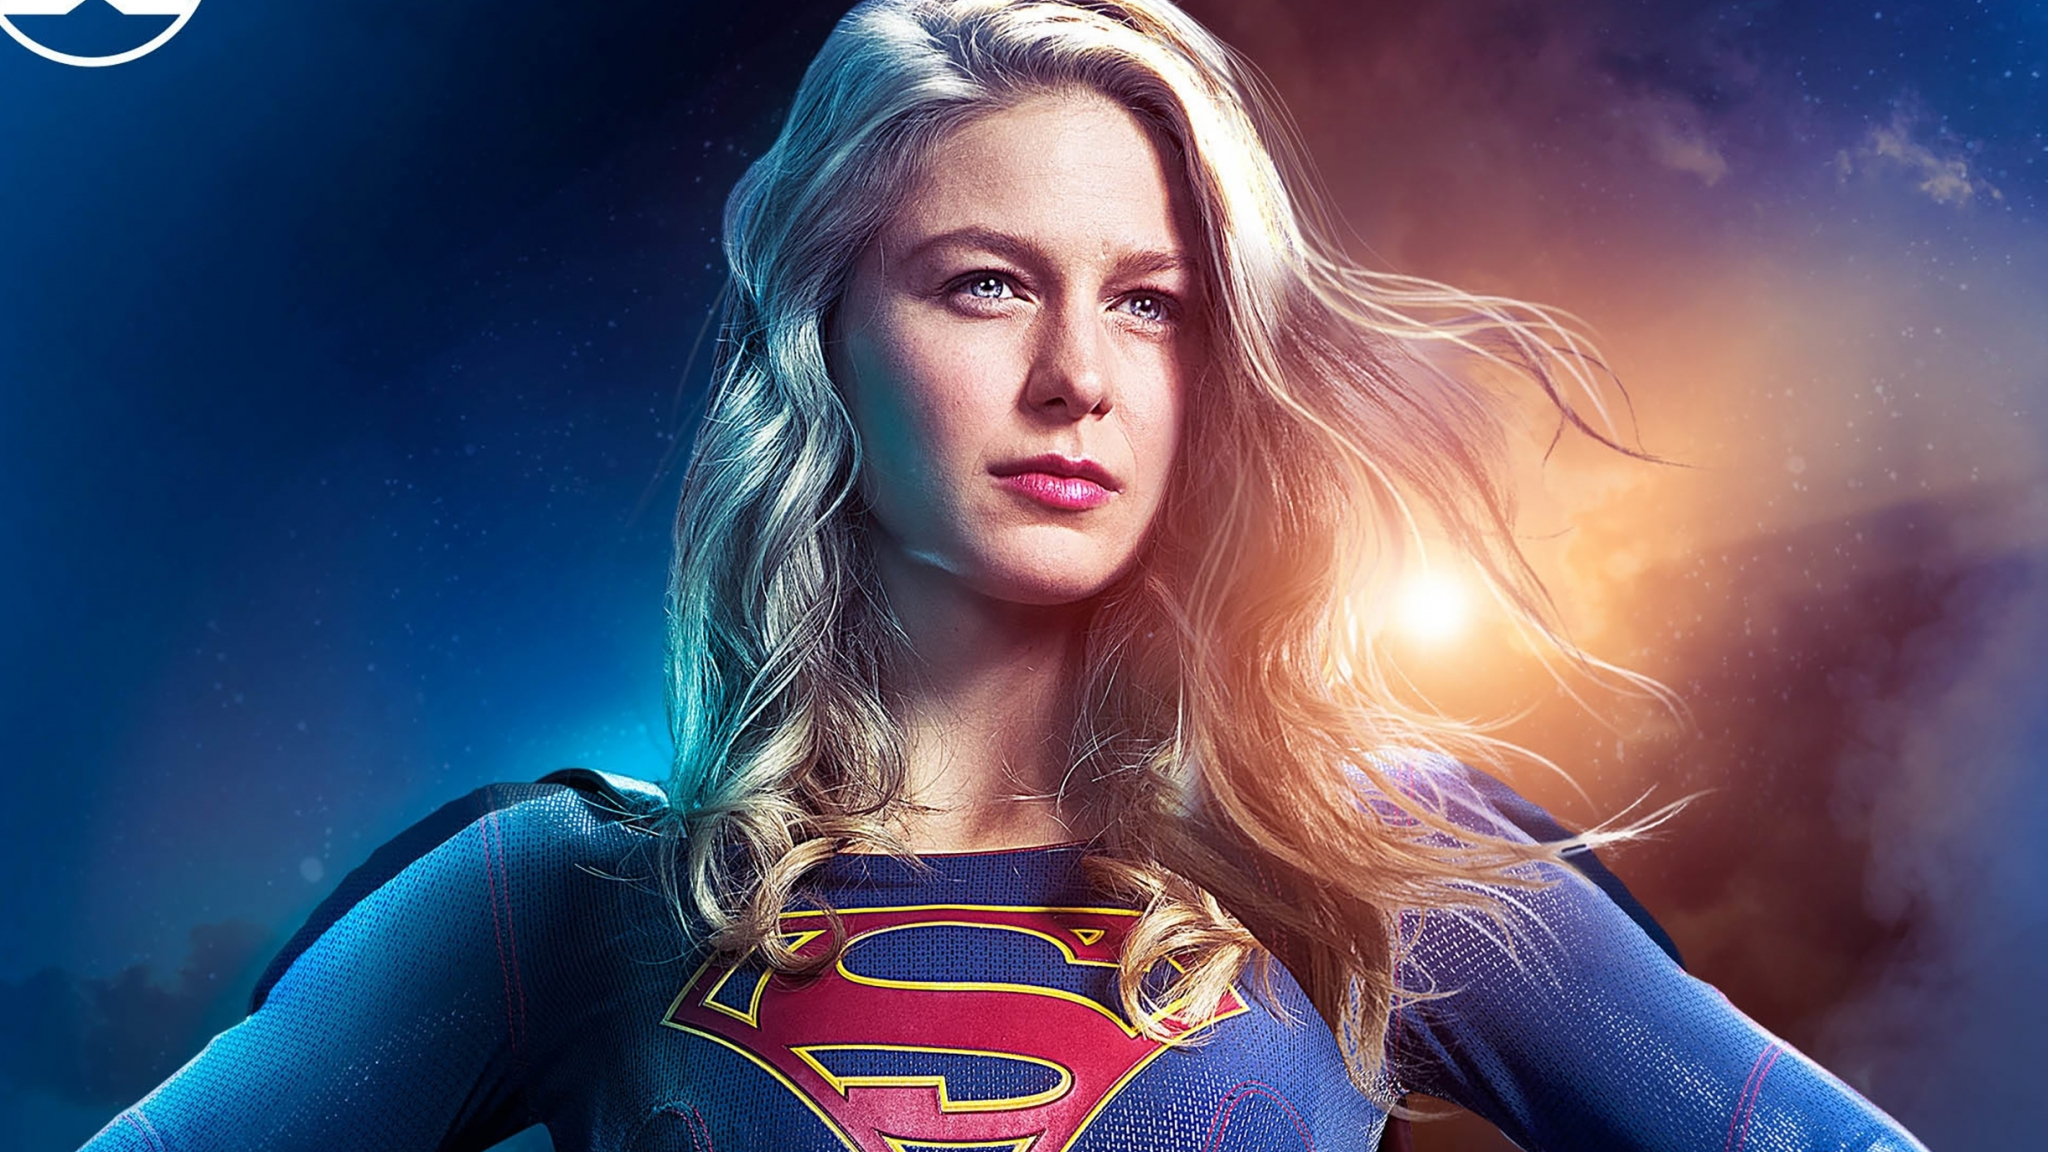 Download Wallpaper 2048x1152 Supergirl Season 5 Melissa Benoist 2019 Dual Wide 2048x1152 Hd 1702